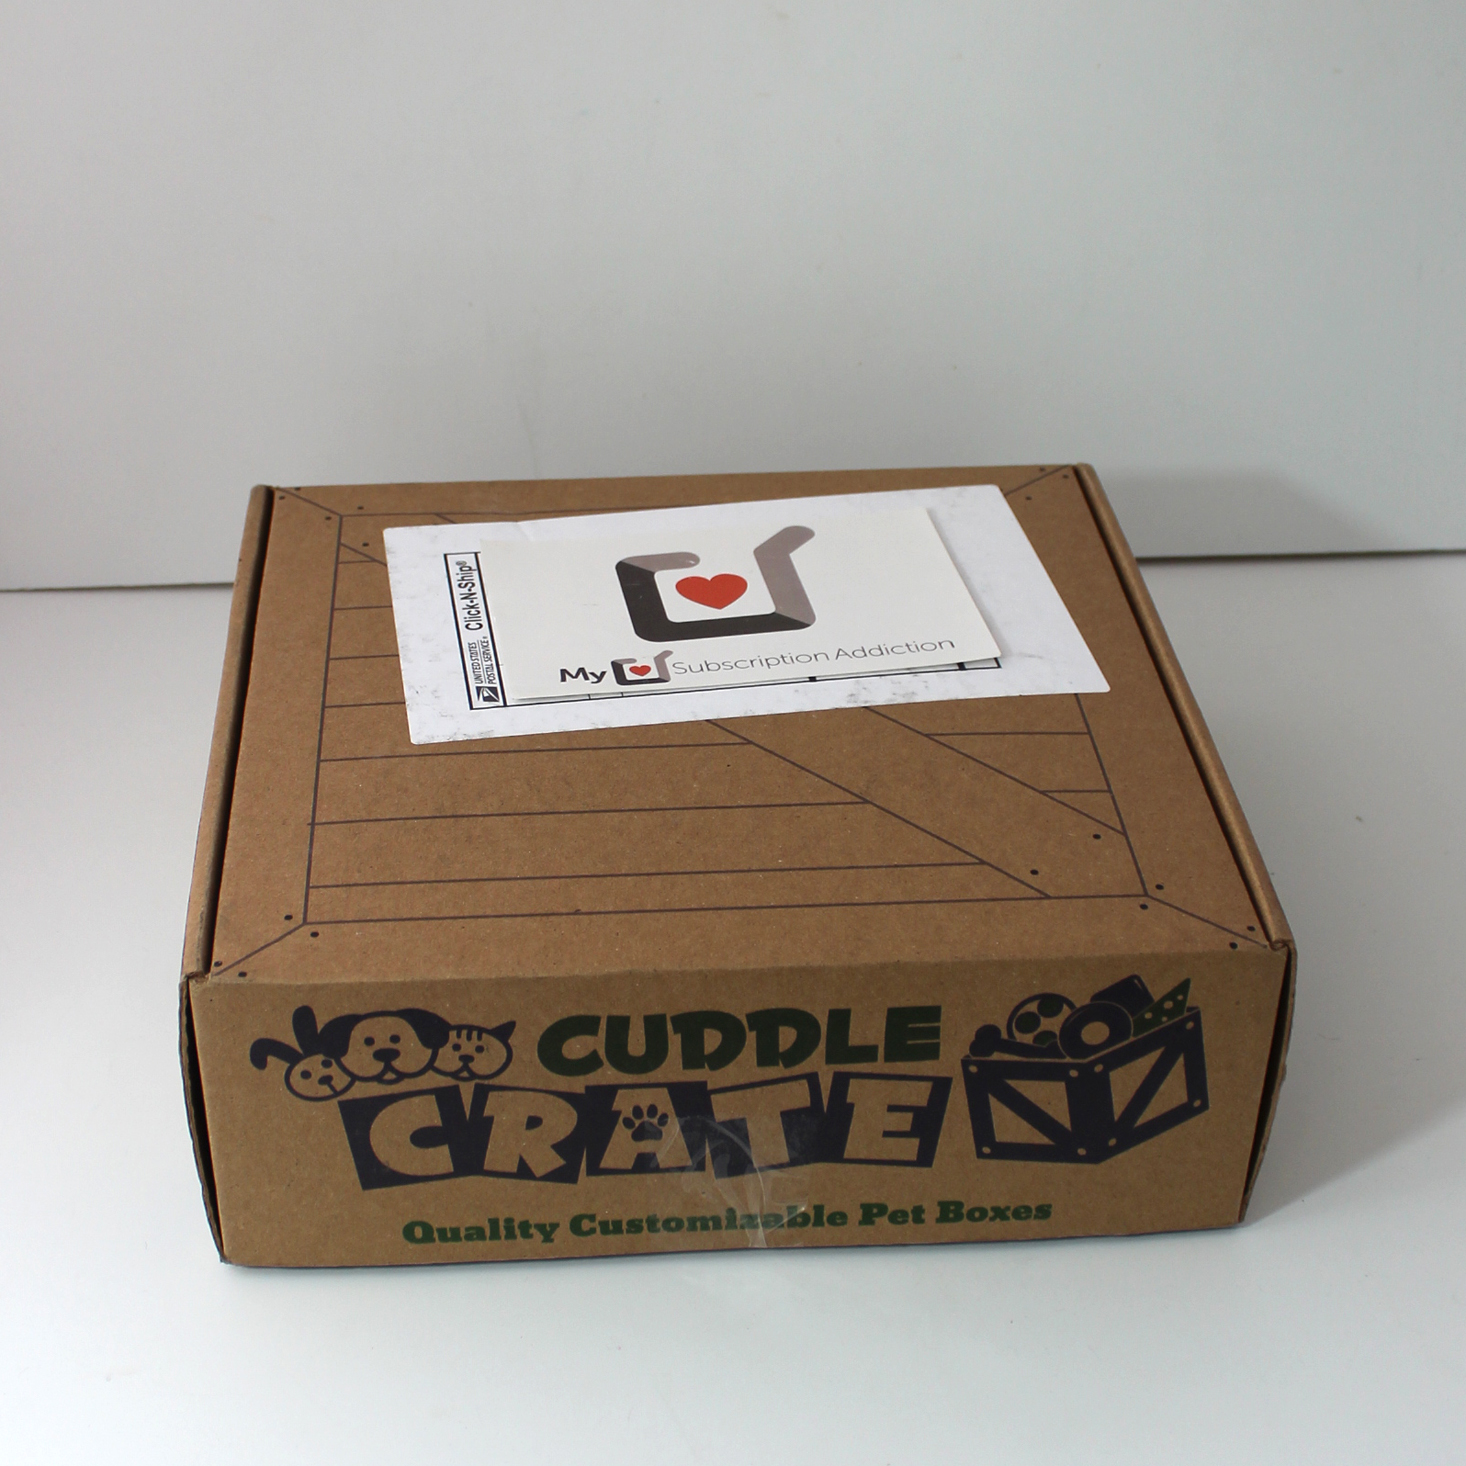 Cuddle Crate Box Review + Coupon – April 2019